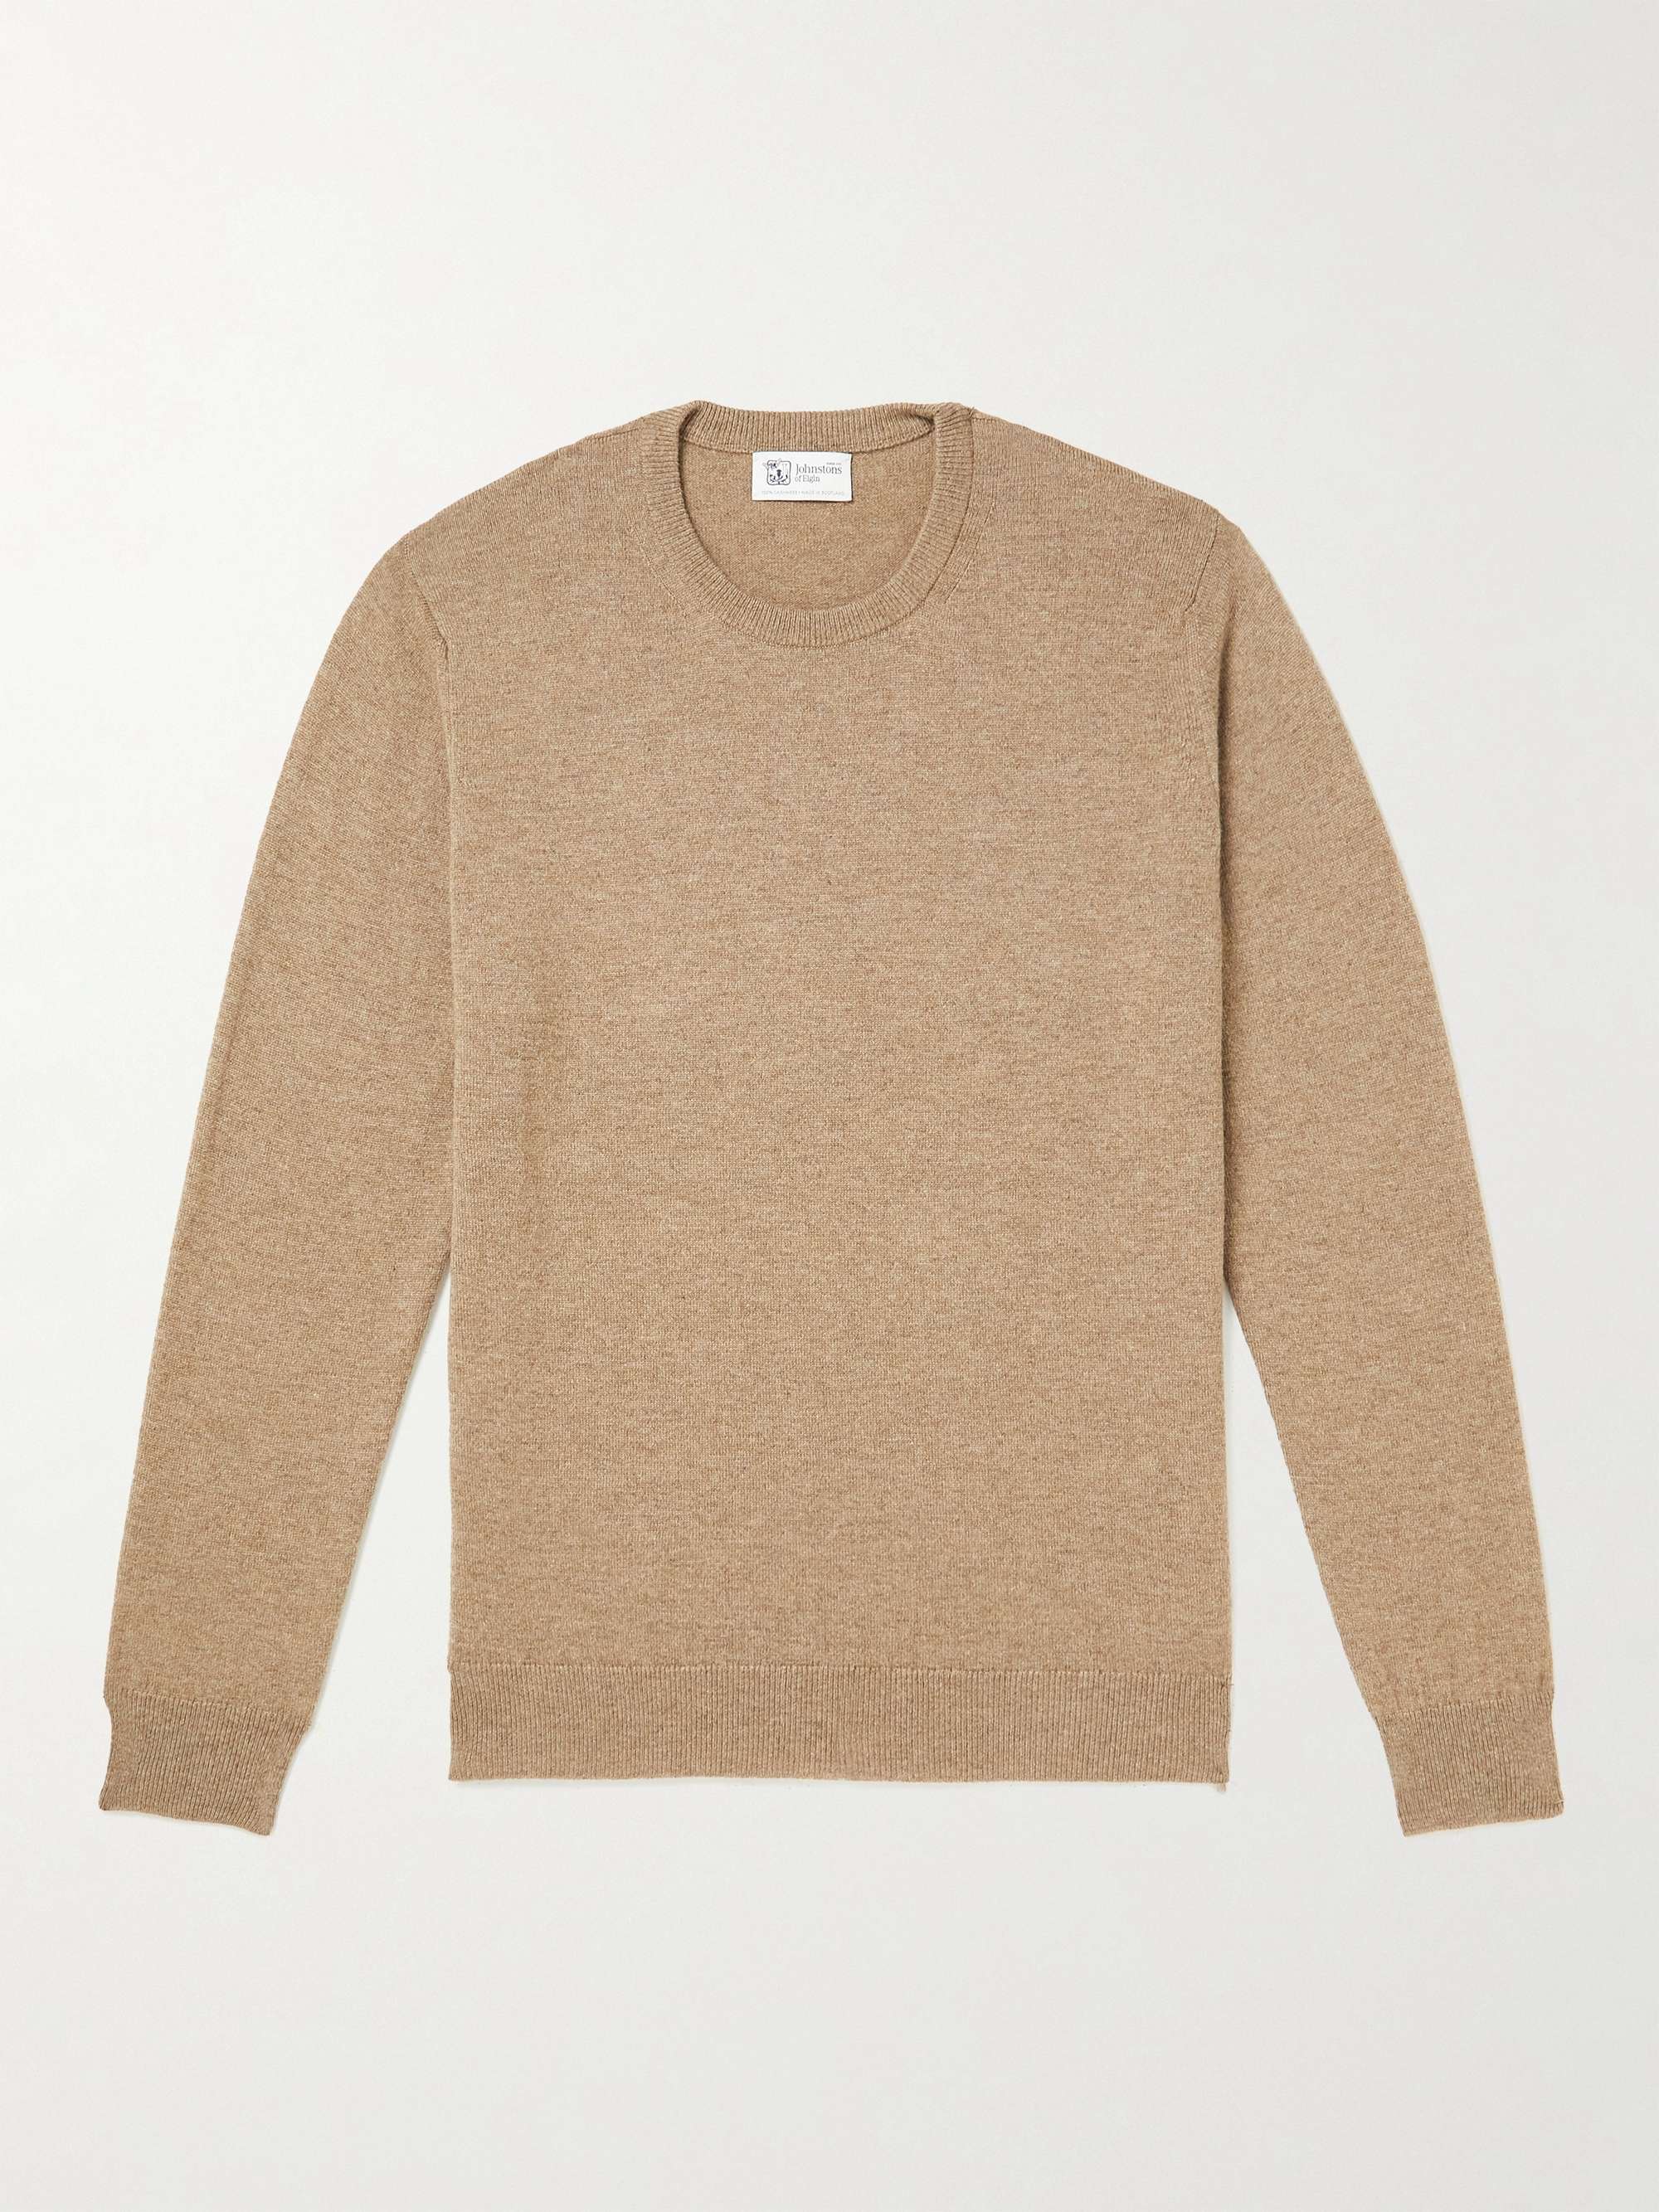 JOHNSTONS OF ELGIN Cashmere Sweater for Men | MR PORTER